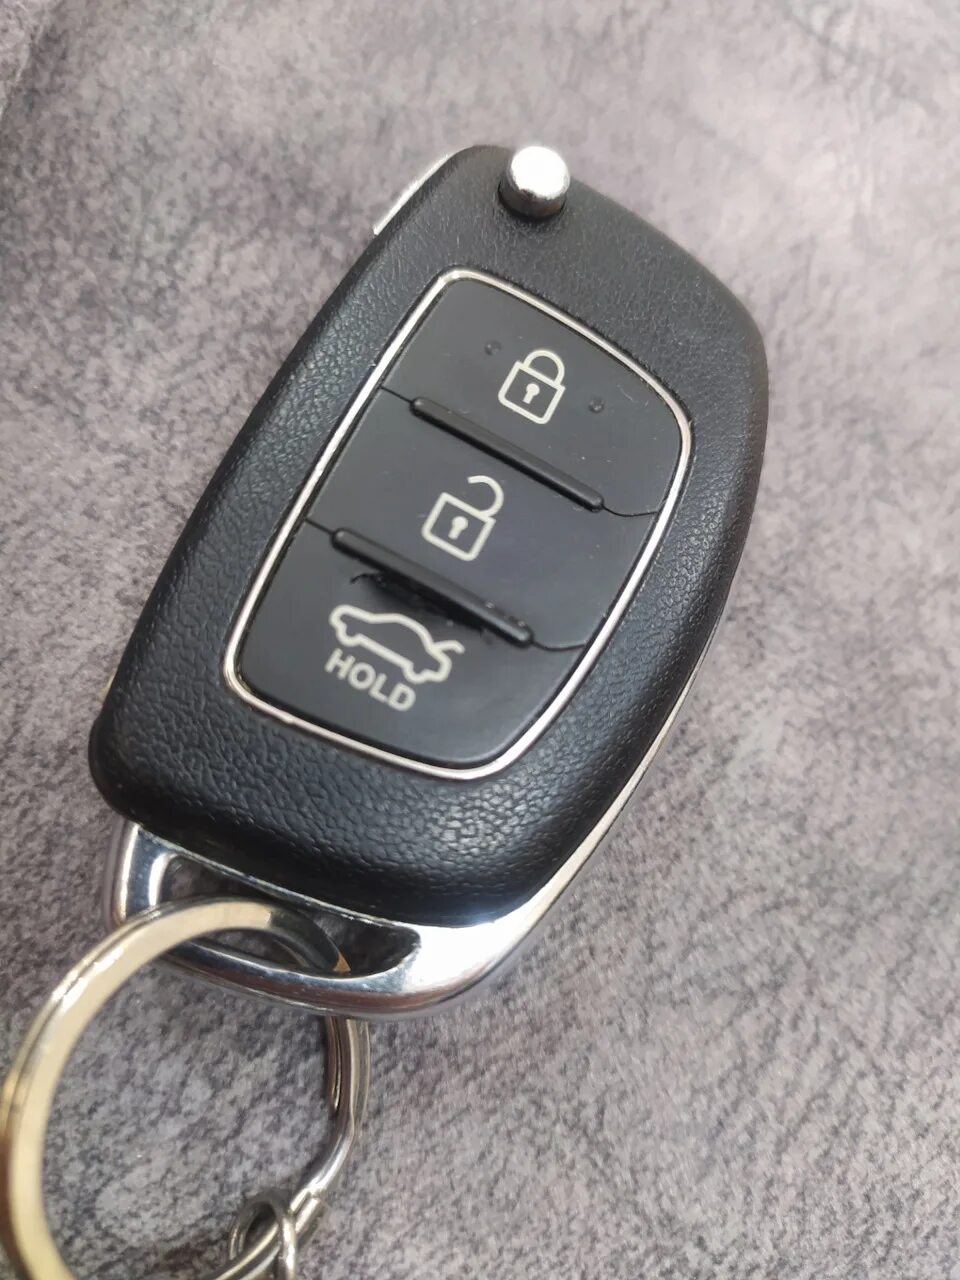 Кнопочный блок для ключа Хендай Солярис 2014. Ключи Hyundai Solaris 1. Ключ от Хендай Солярис 2015. Кнопки для ключа Хендай Солярис 2015 года. Ключ солярис купить